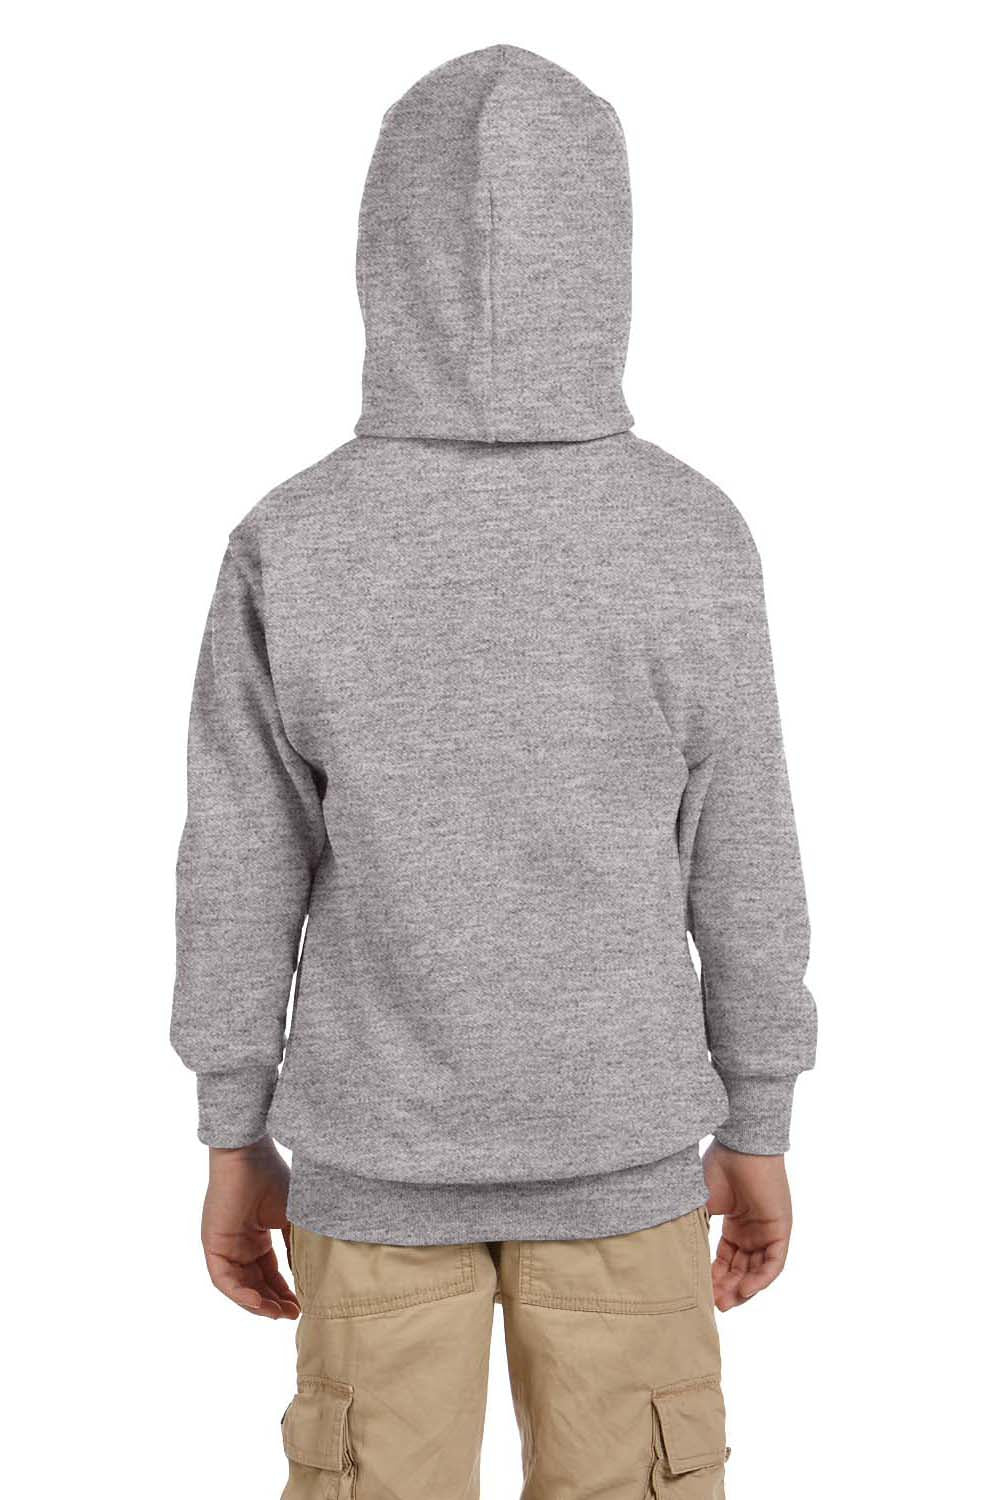 Hanes P473 Youth EcoSmart Print Pro XP Hooded Sweatshirt Hoodie Light Steel Grey Back